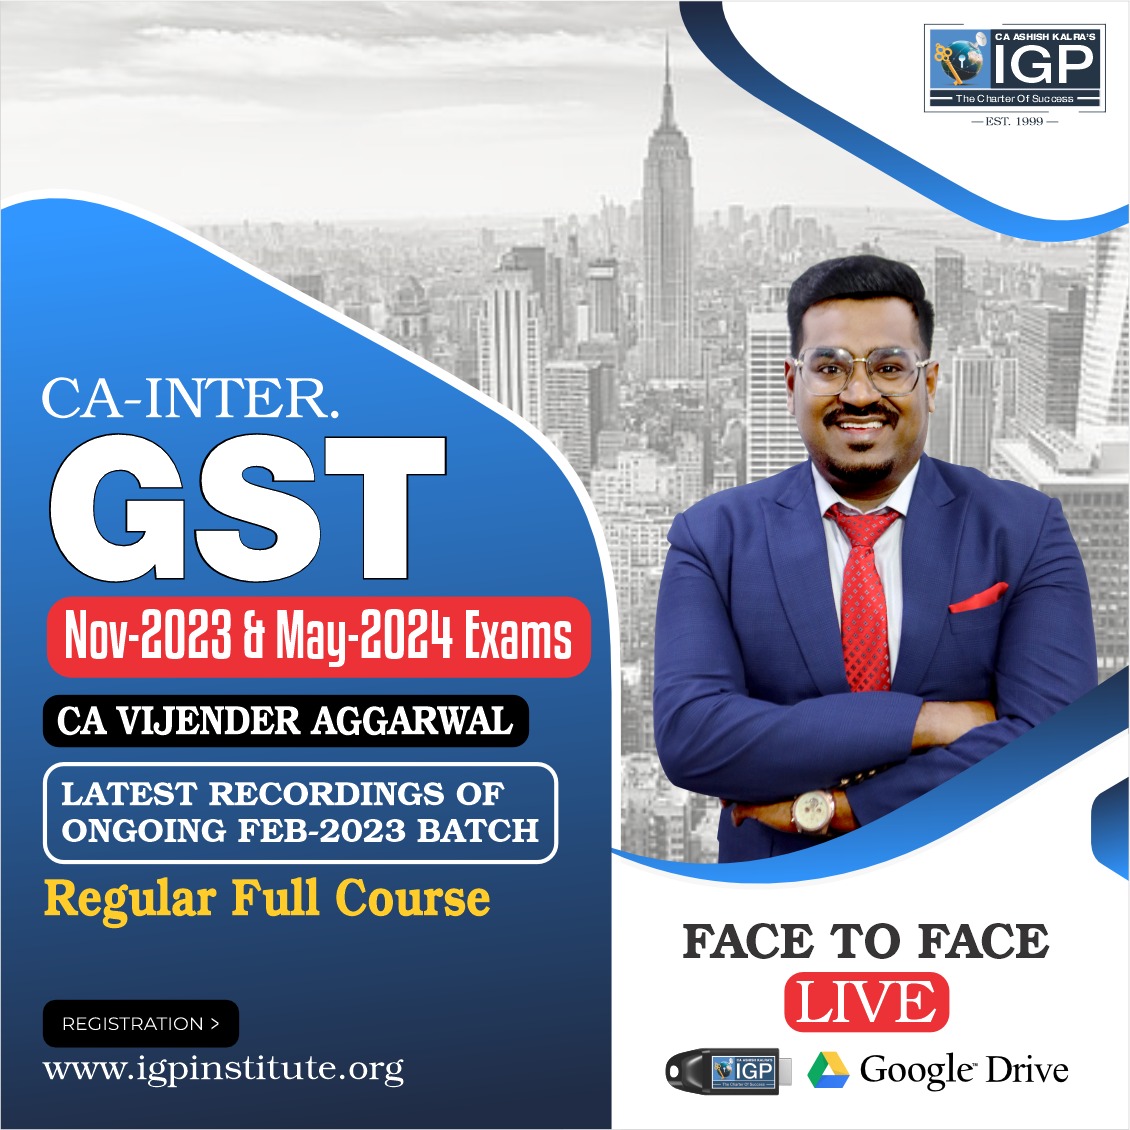 CA-Taxation (GST)-CA Vijender Aggarwal